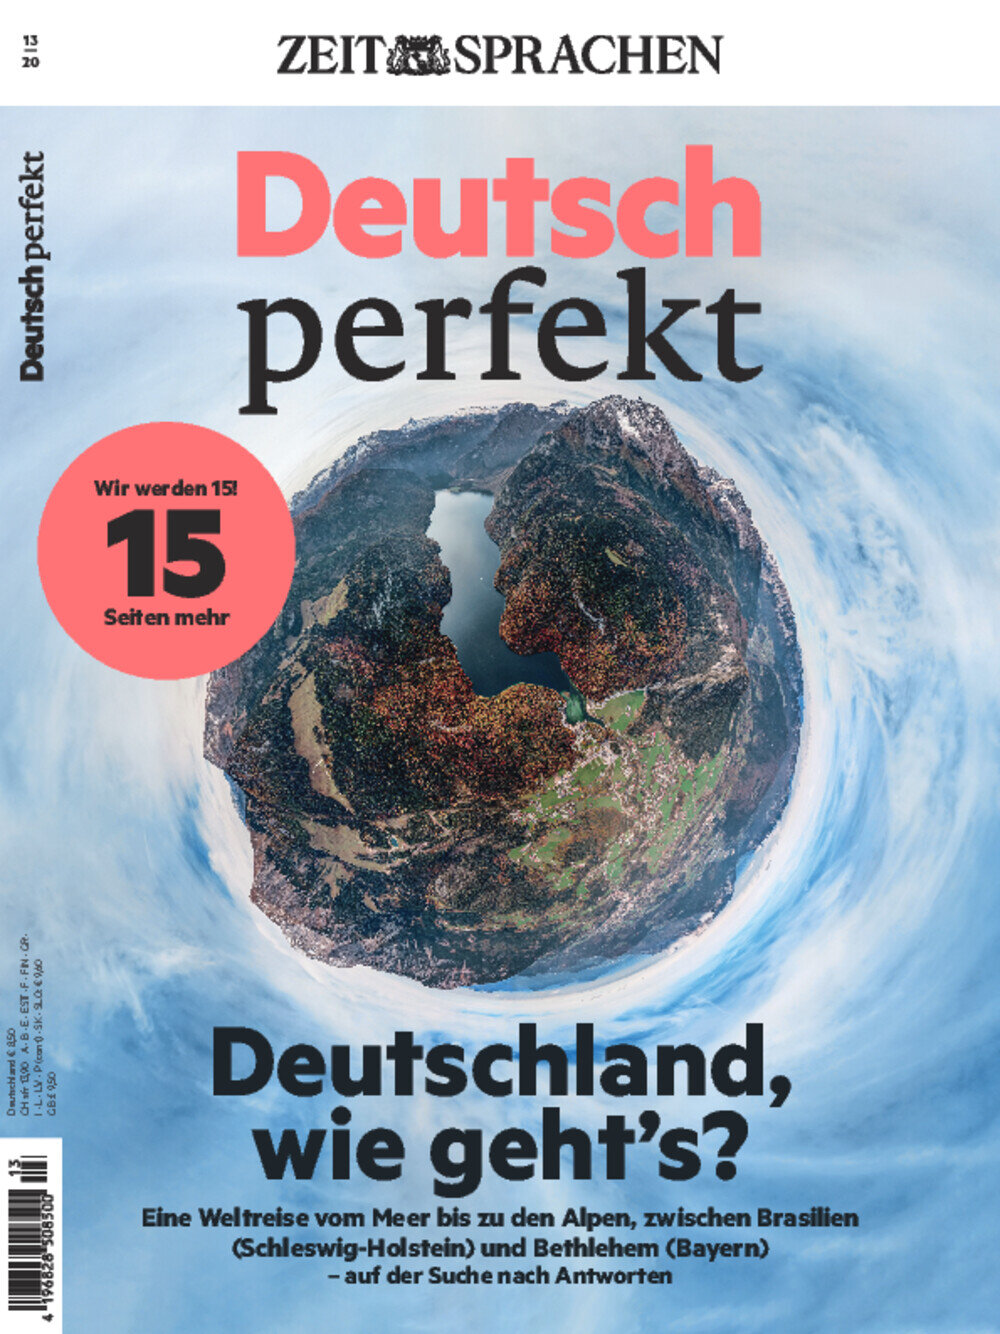 Deutsch perfekt ePaper 13/2020